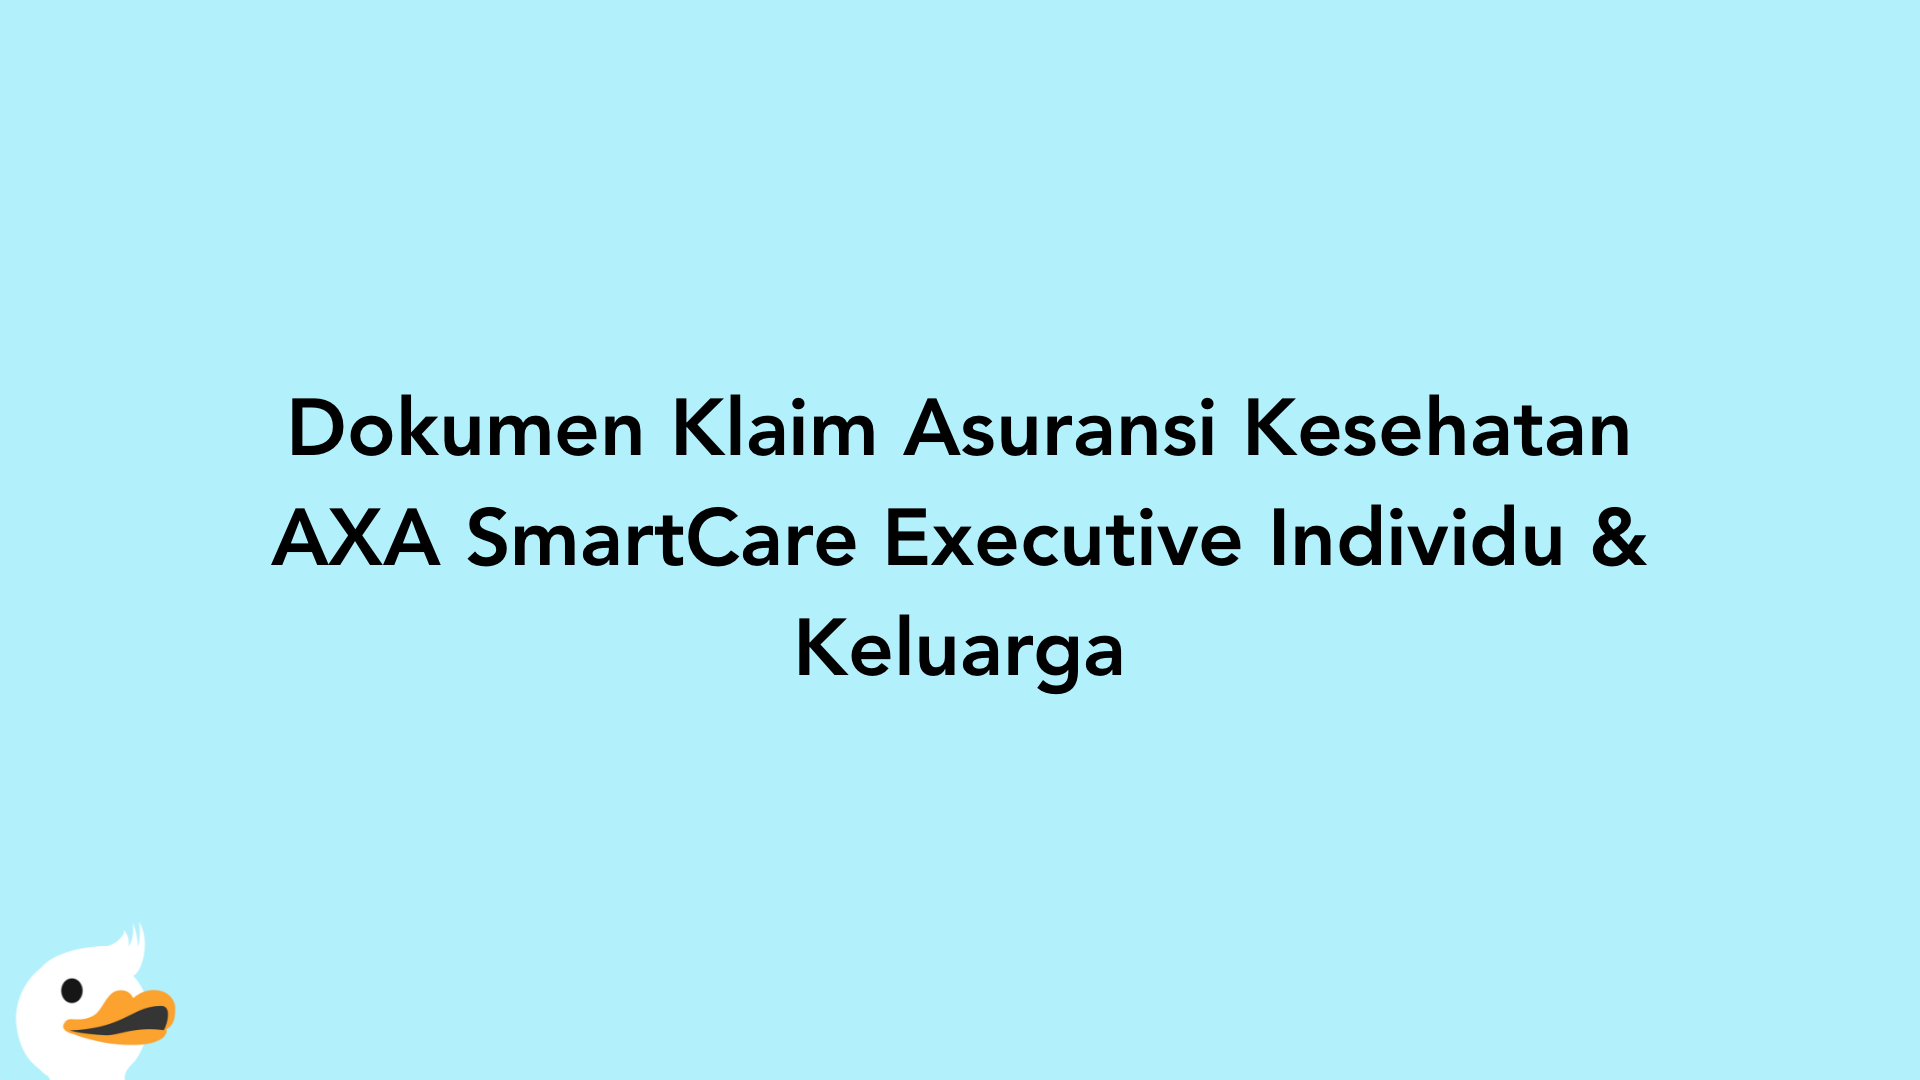 Dokumen Klaim Asuransi Kesehatan AXA SmartCare Executive Individu & Keluarga